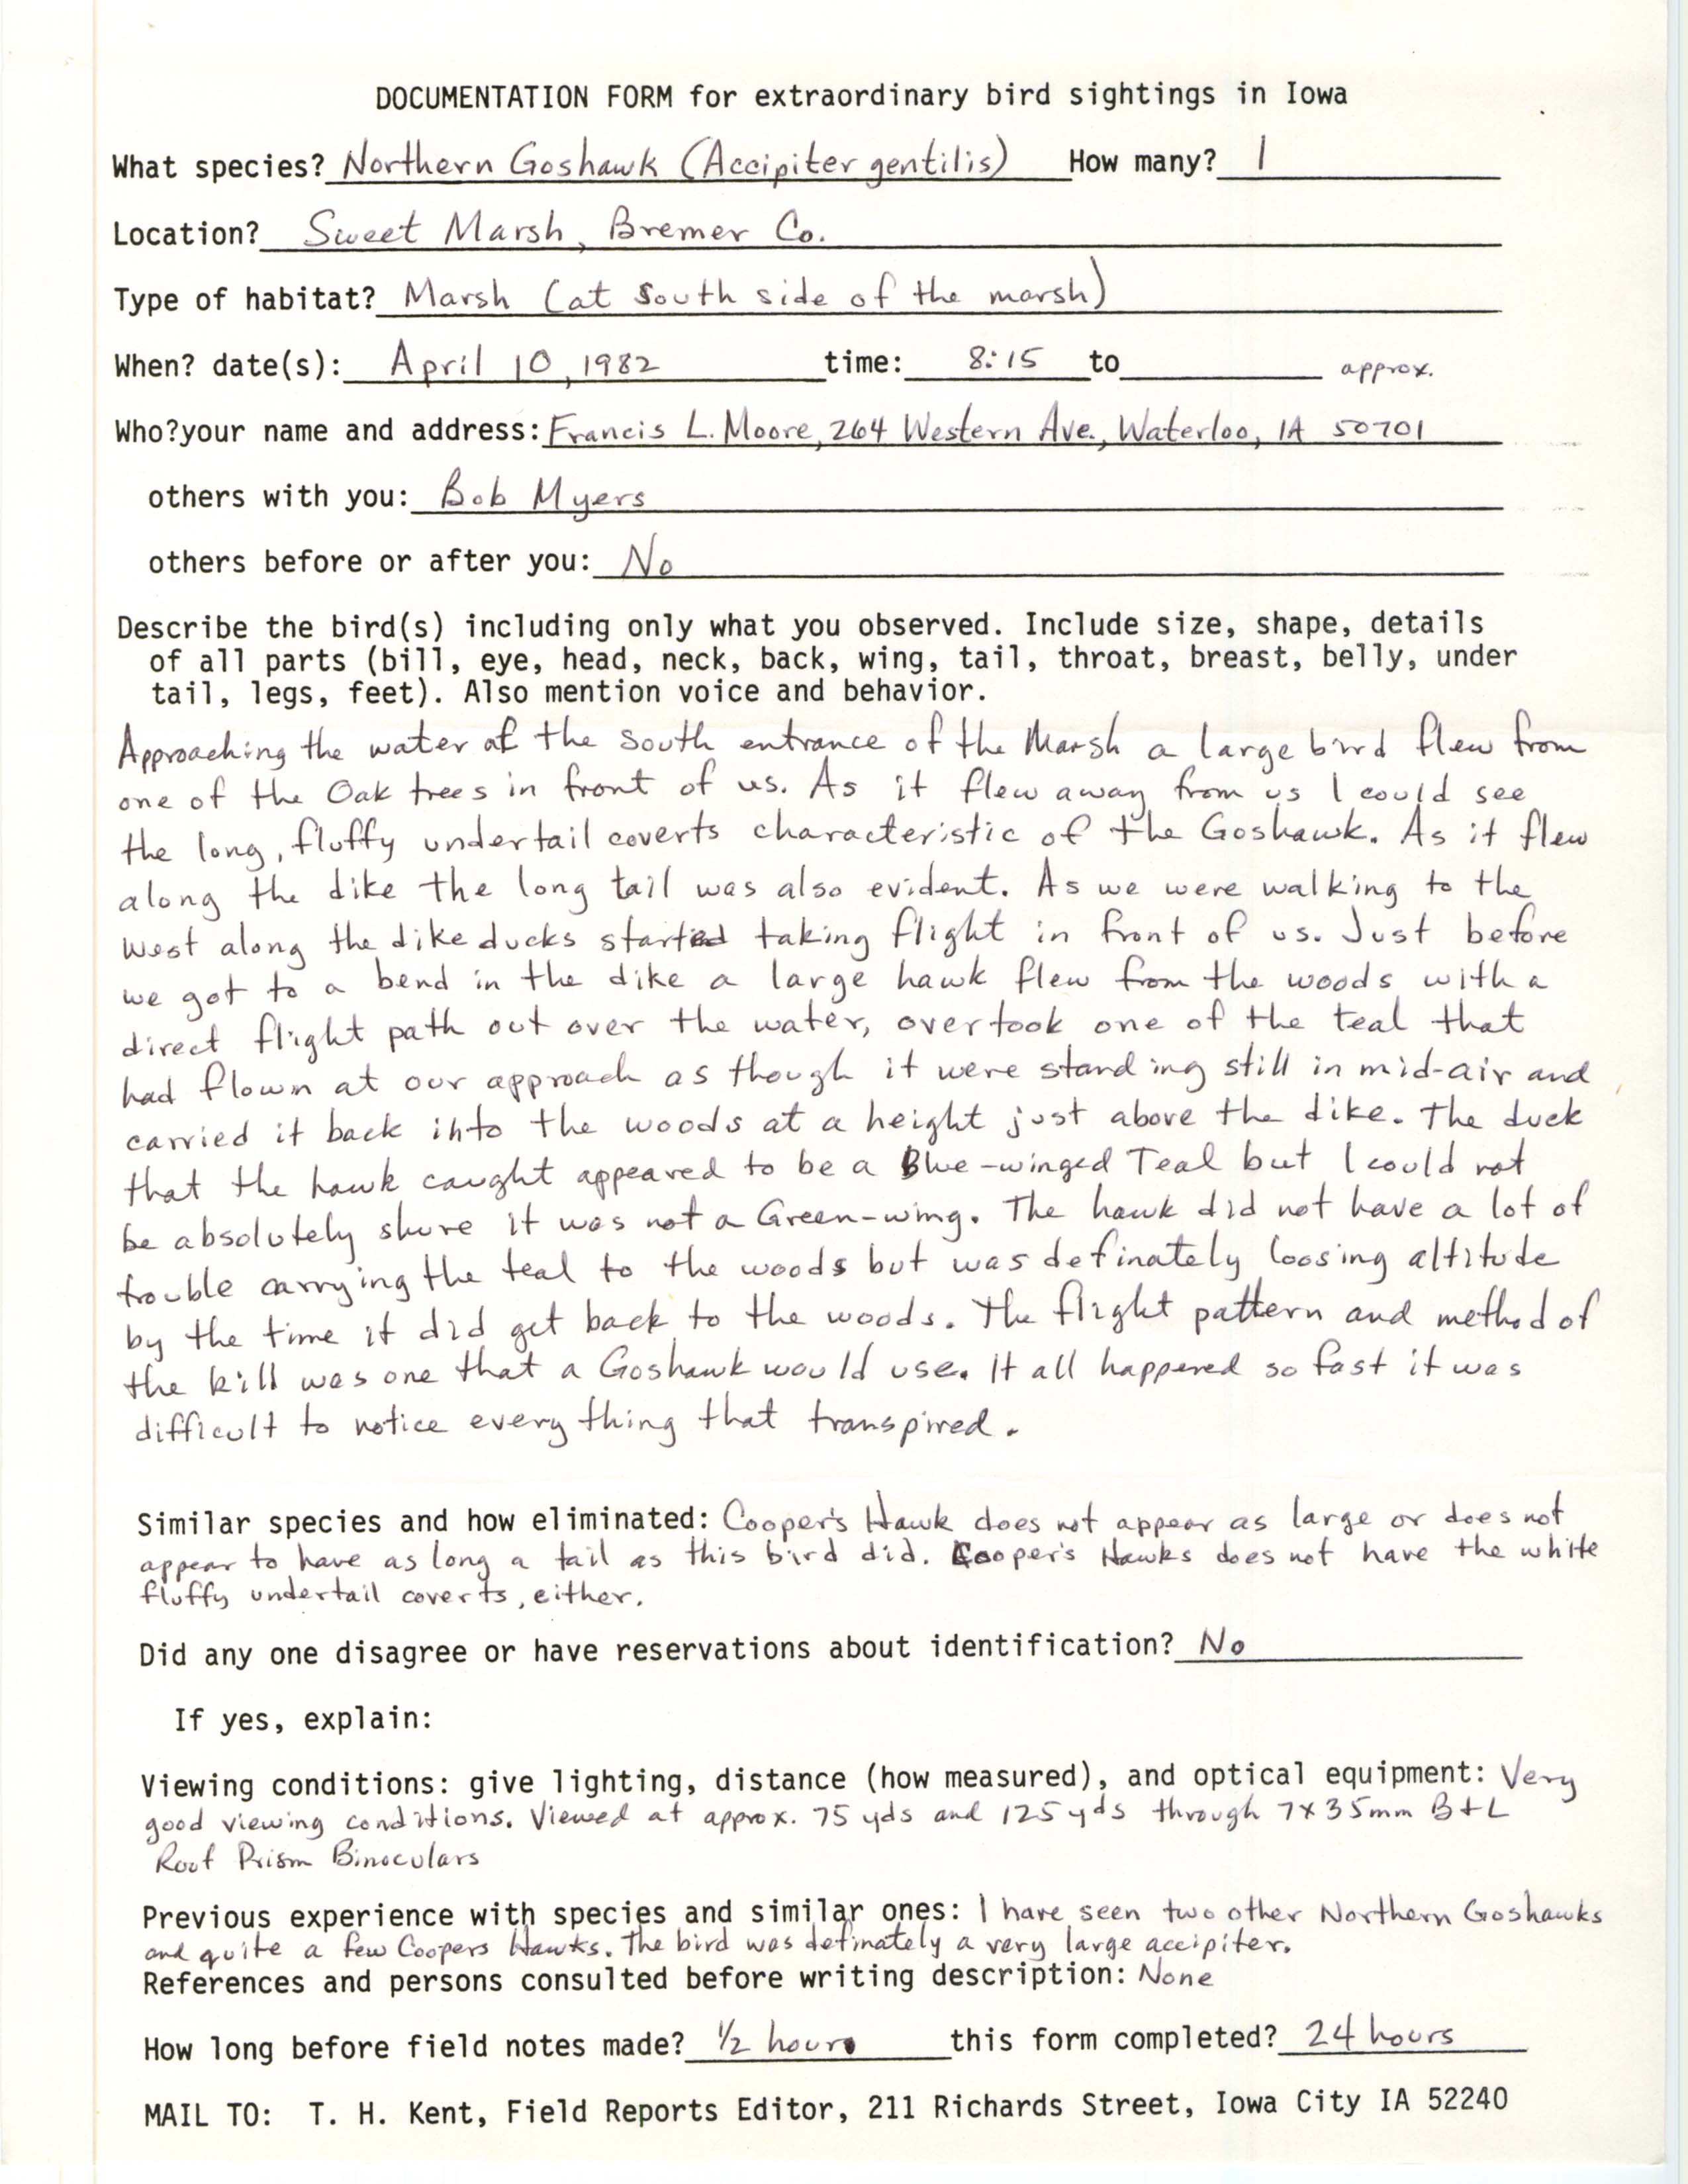 Rare bird documentation form for Northern Goshawk at Sweet Marsh, 1982